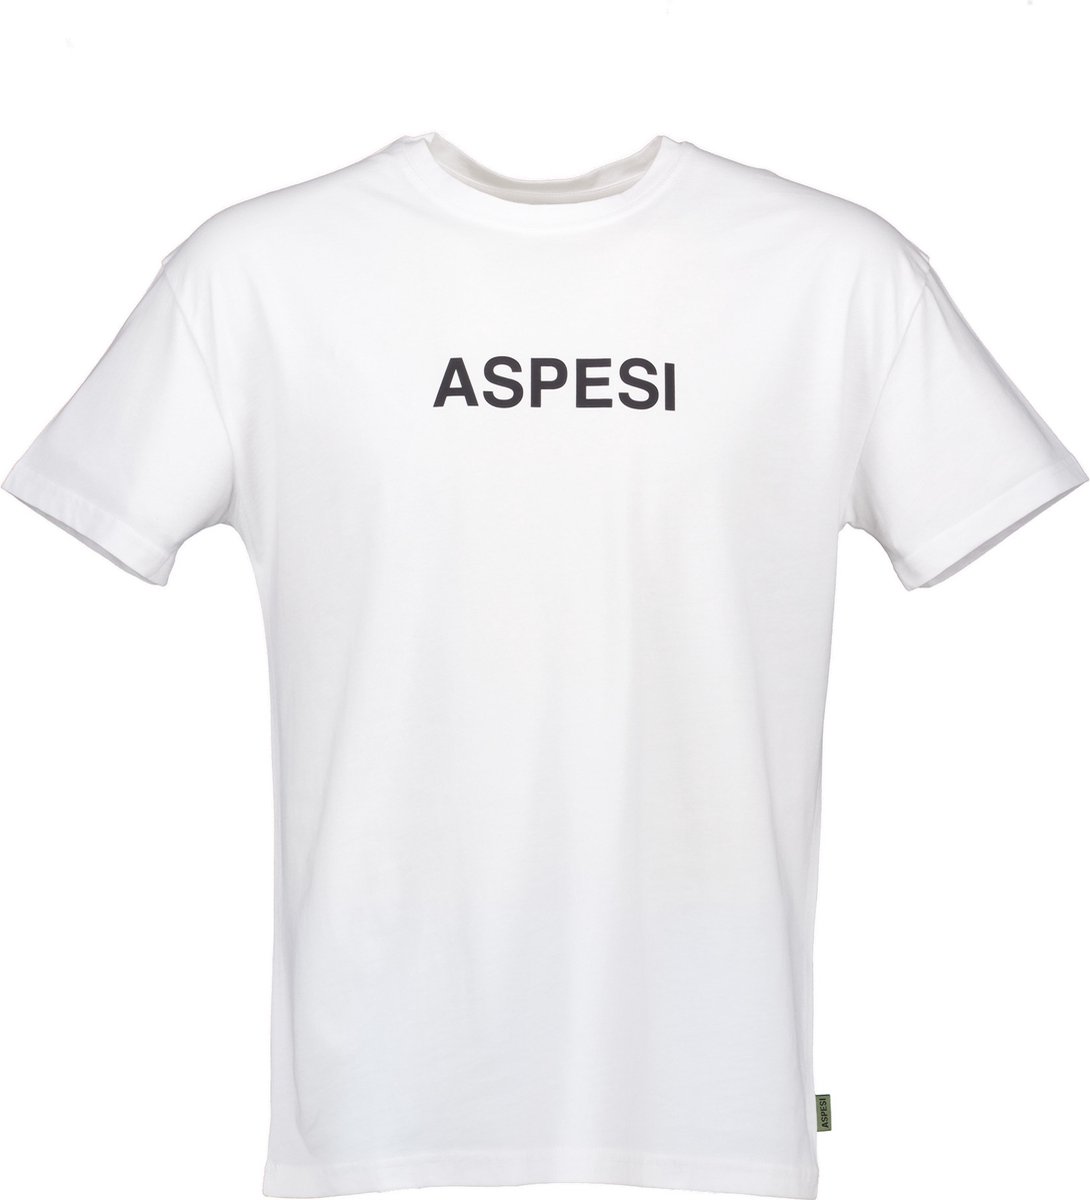 Aspesi Shirt Wit Katoen maat L Basic t-shirts wit